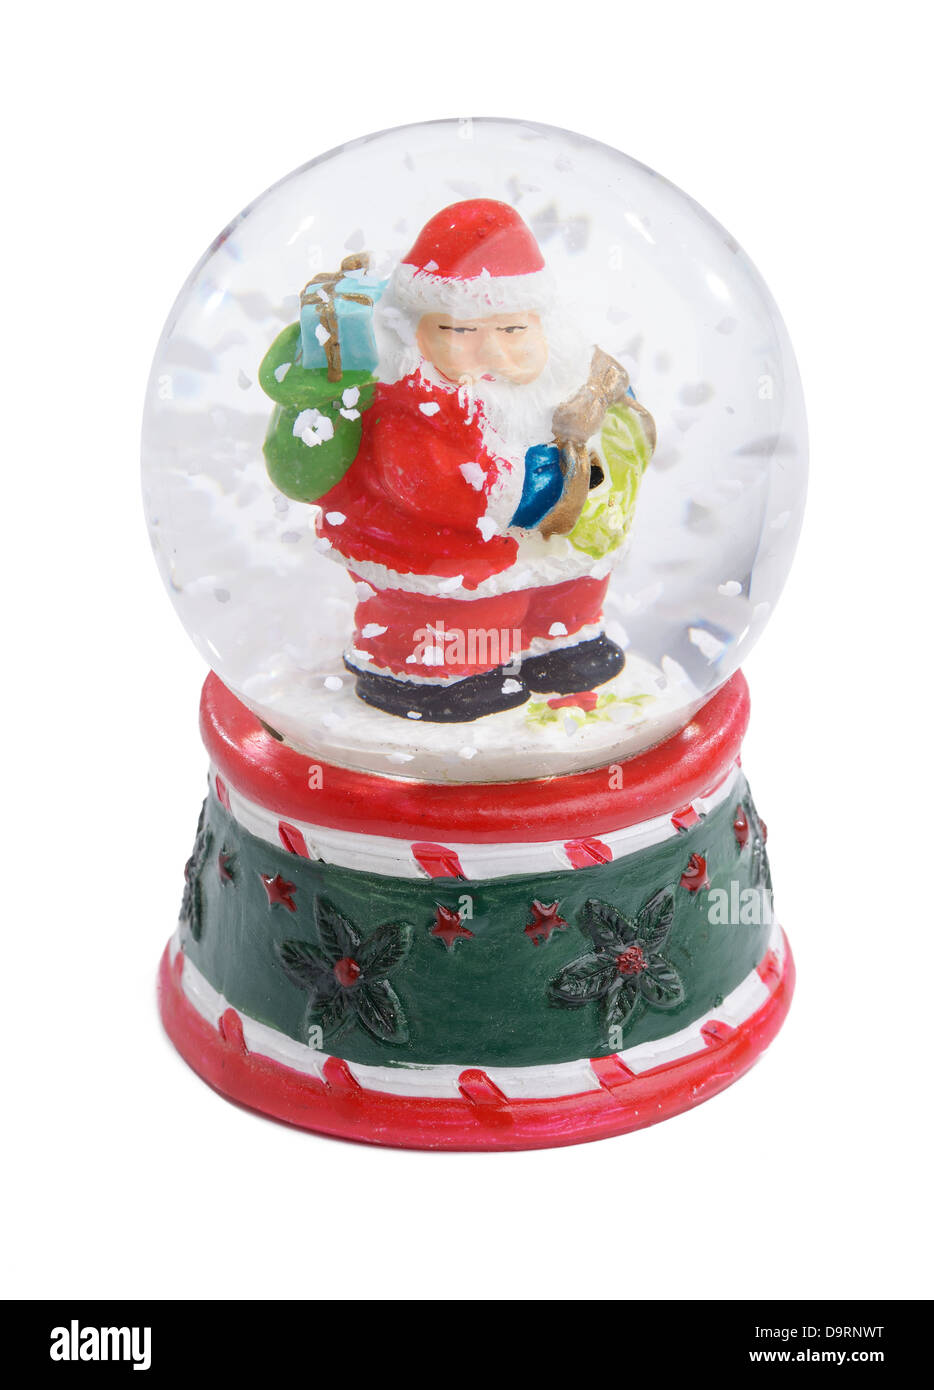 Father Christmas snow globe ornament Stock Photo